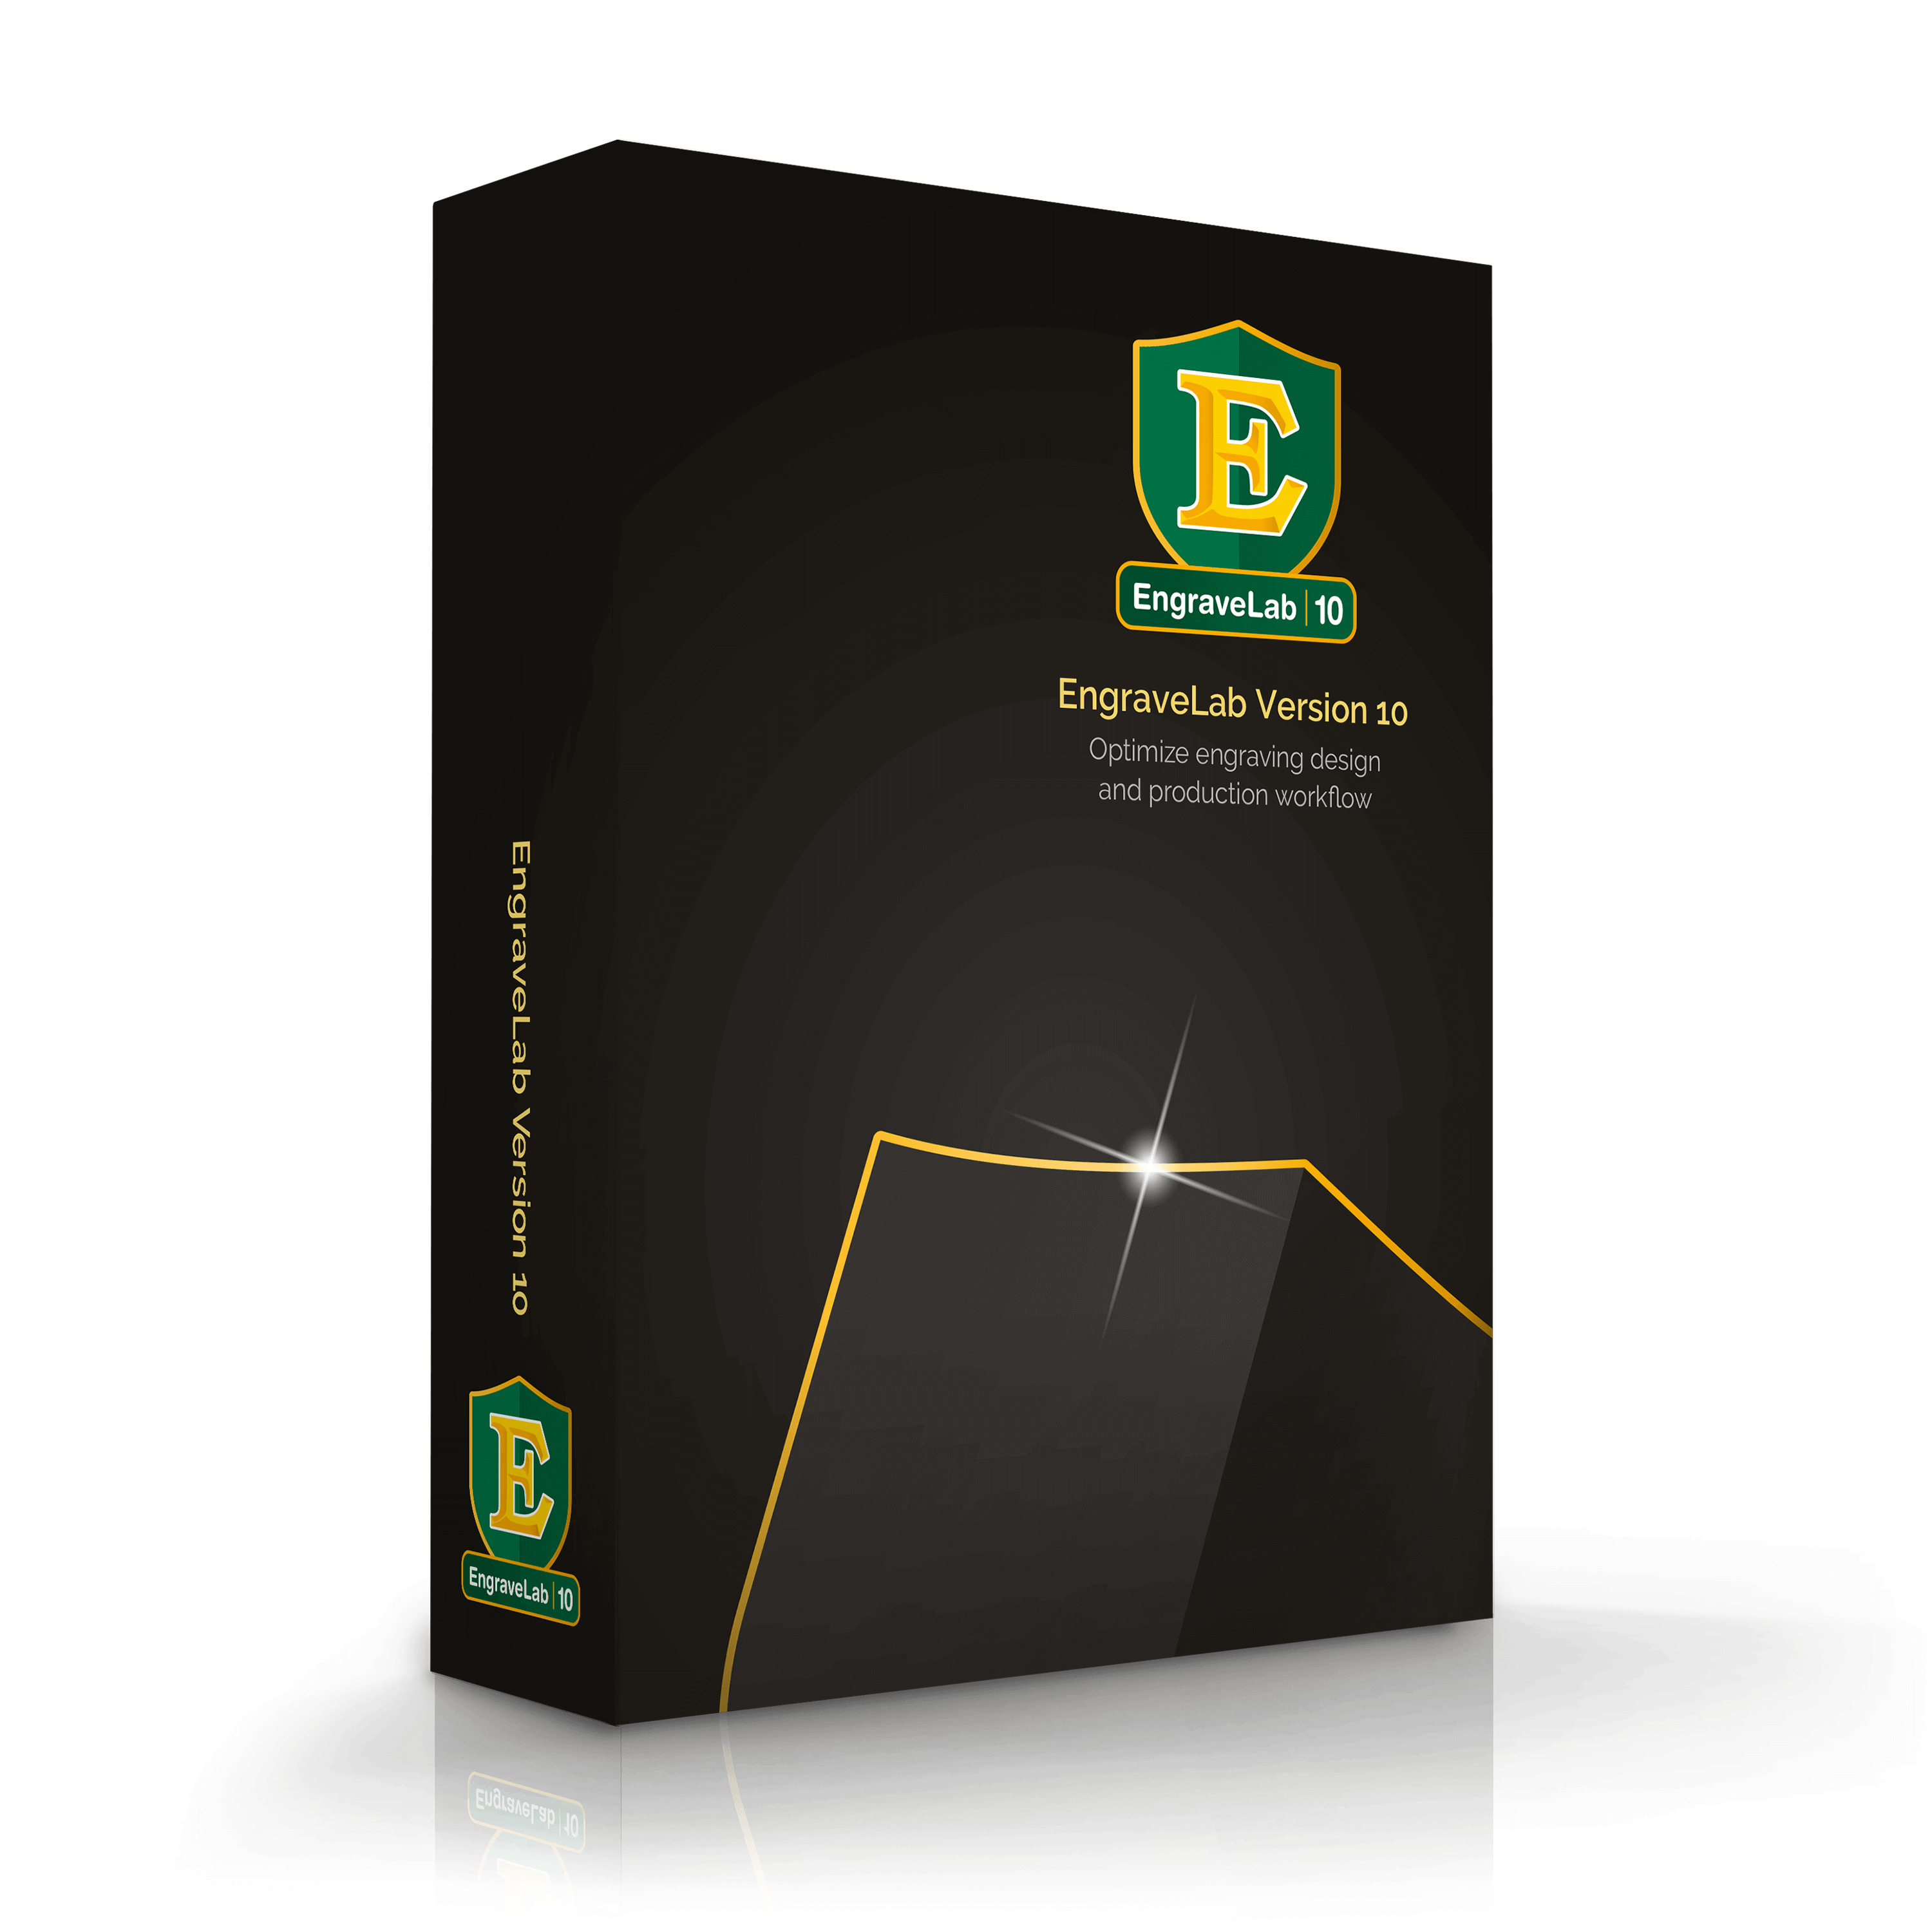 EngraveLab version 10 software package